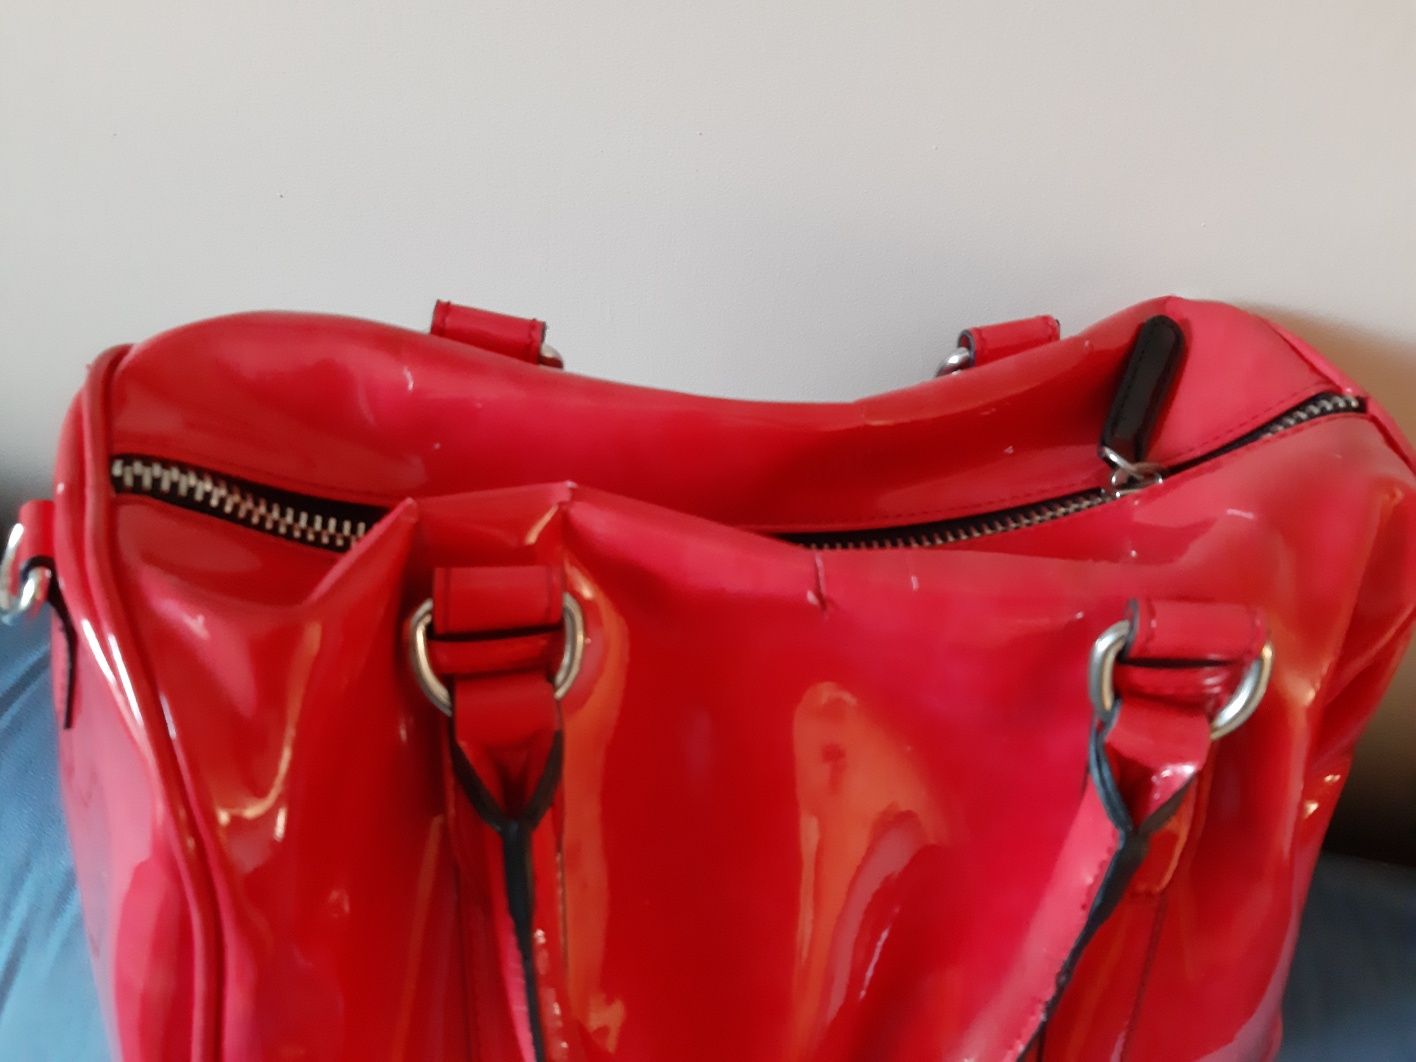 Torebka kuferek Mango czerwona kolor intensywny kufer torebeczka